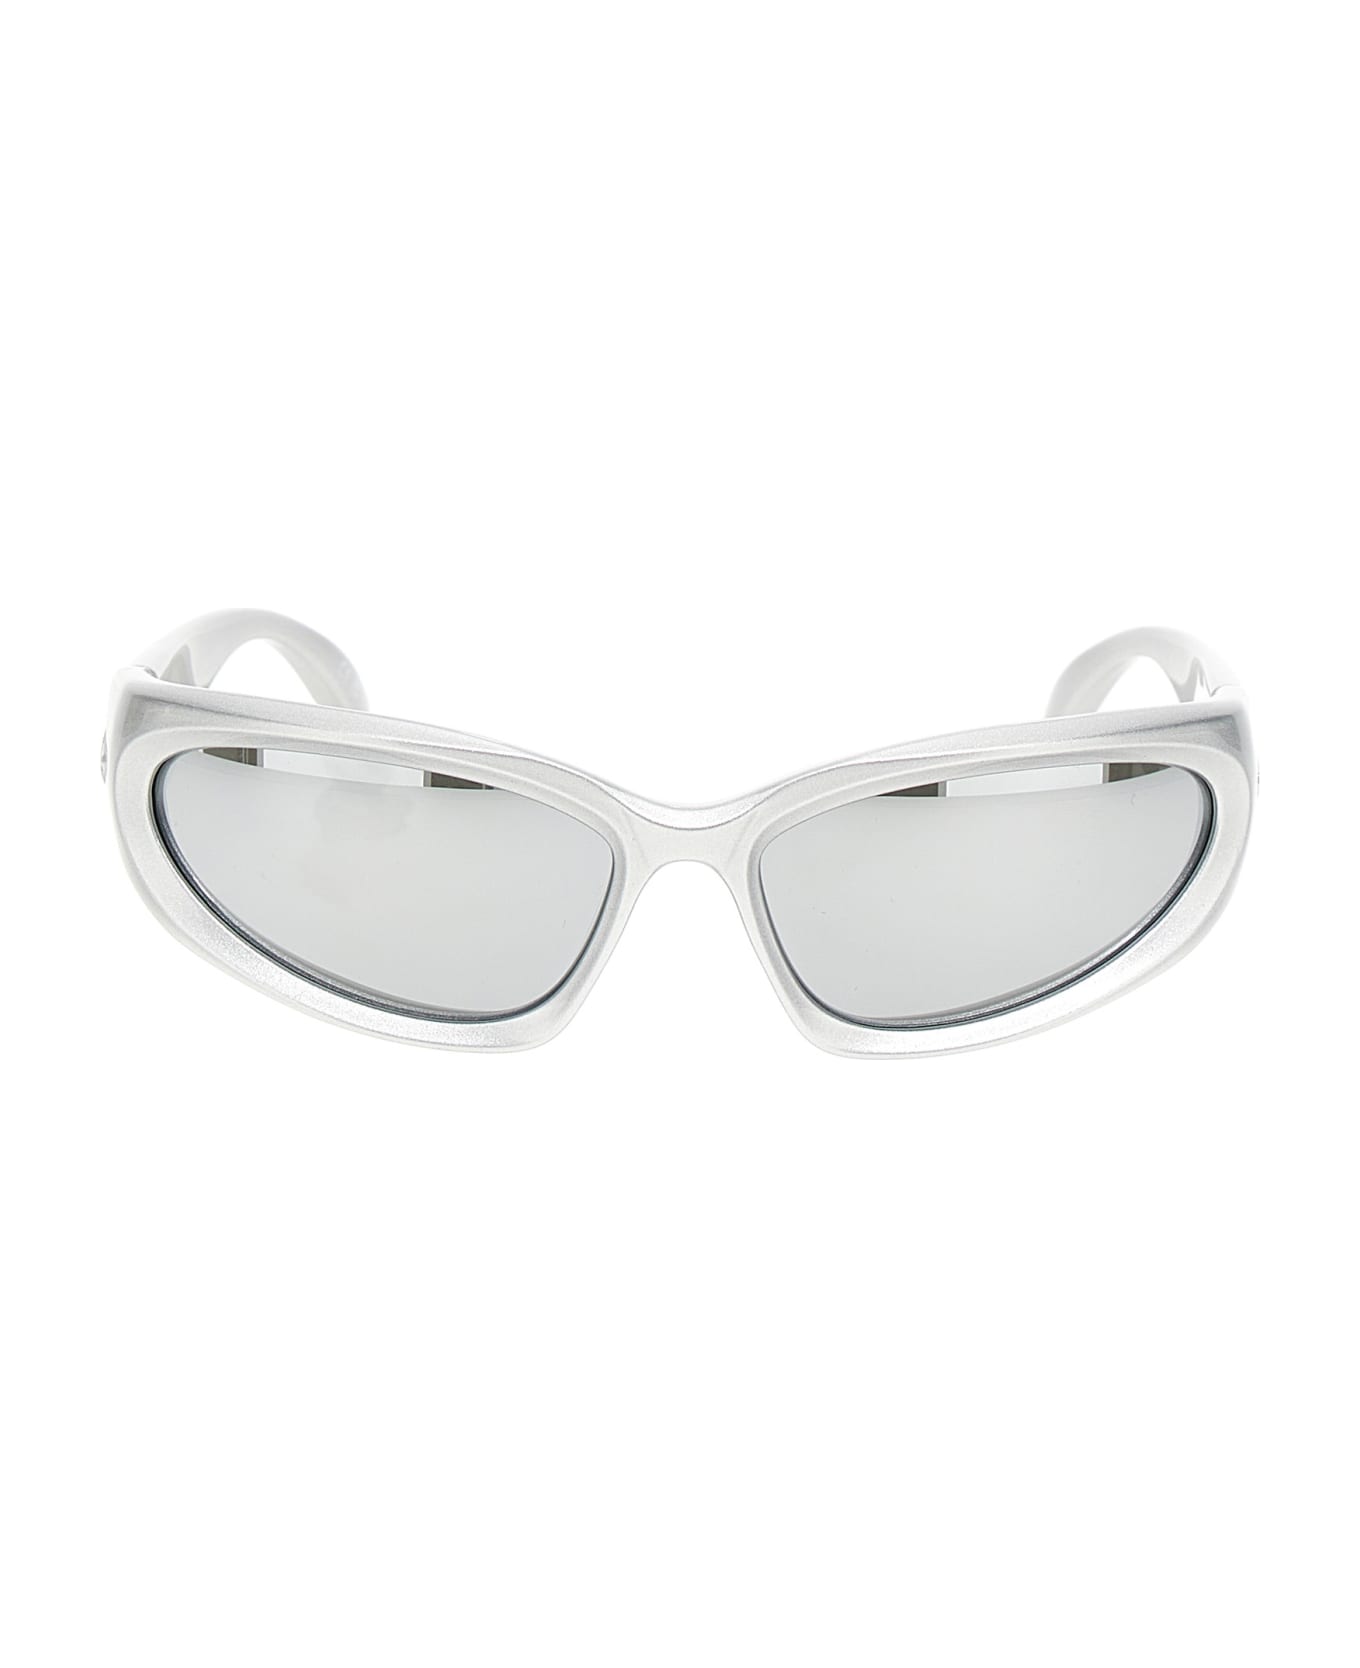 Balenciaga Eyewear Swift Oval Sunglasses - Metallic サングラス